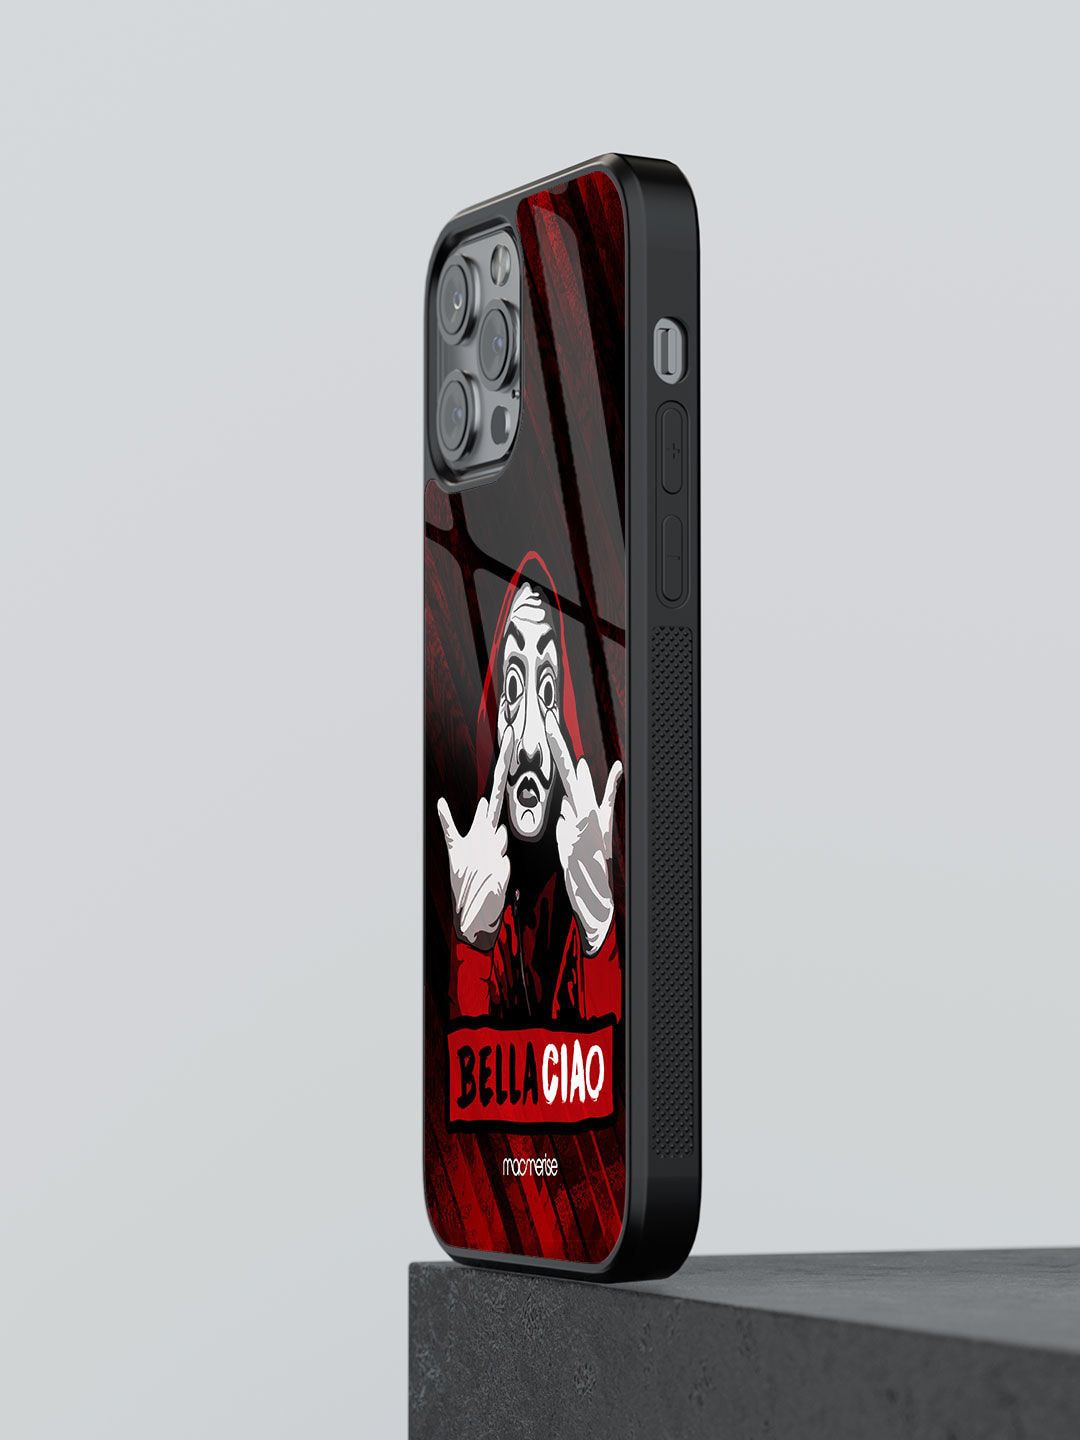 macmerise Red & Black Bella Ciao iPhone 13 Pro Max Mobile Phone Case Price in India